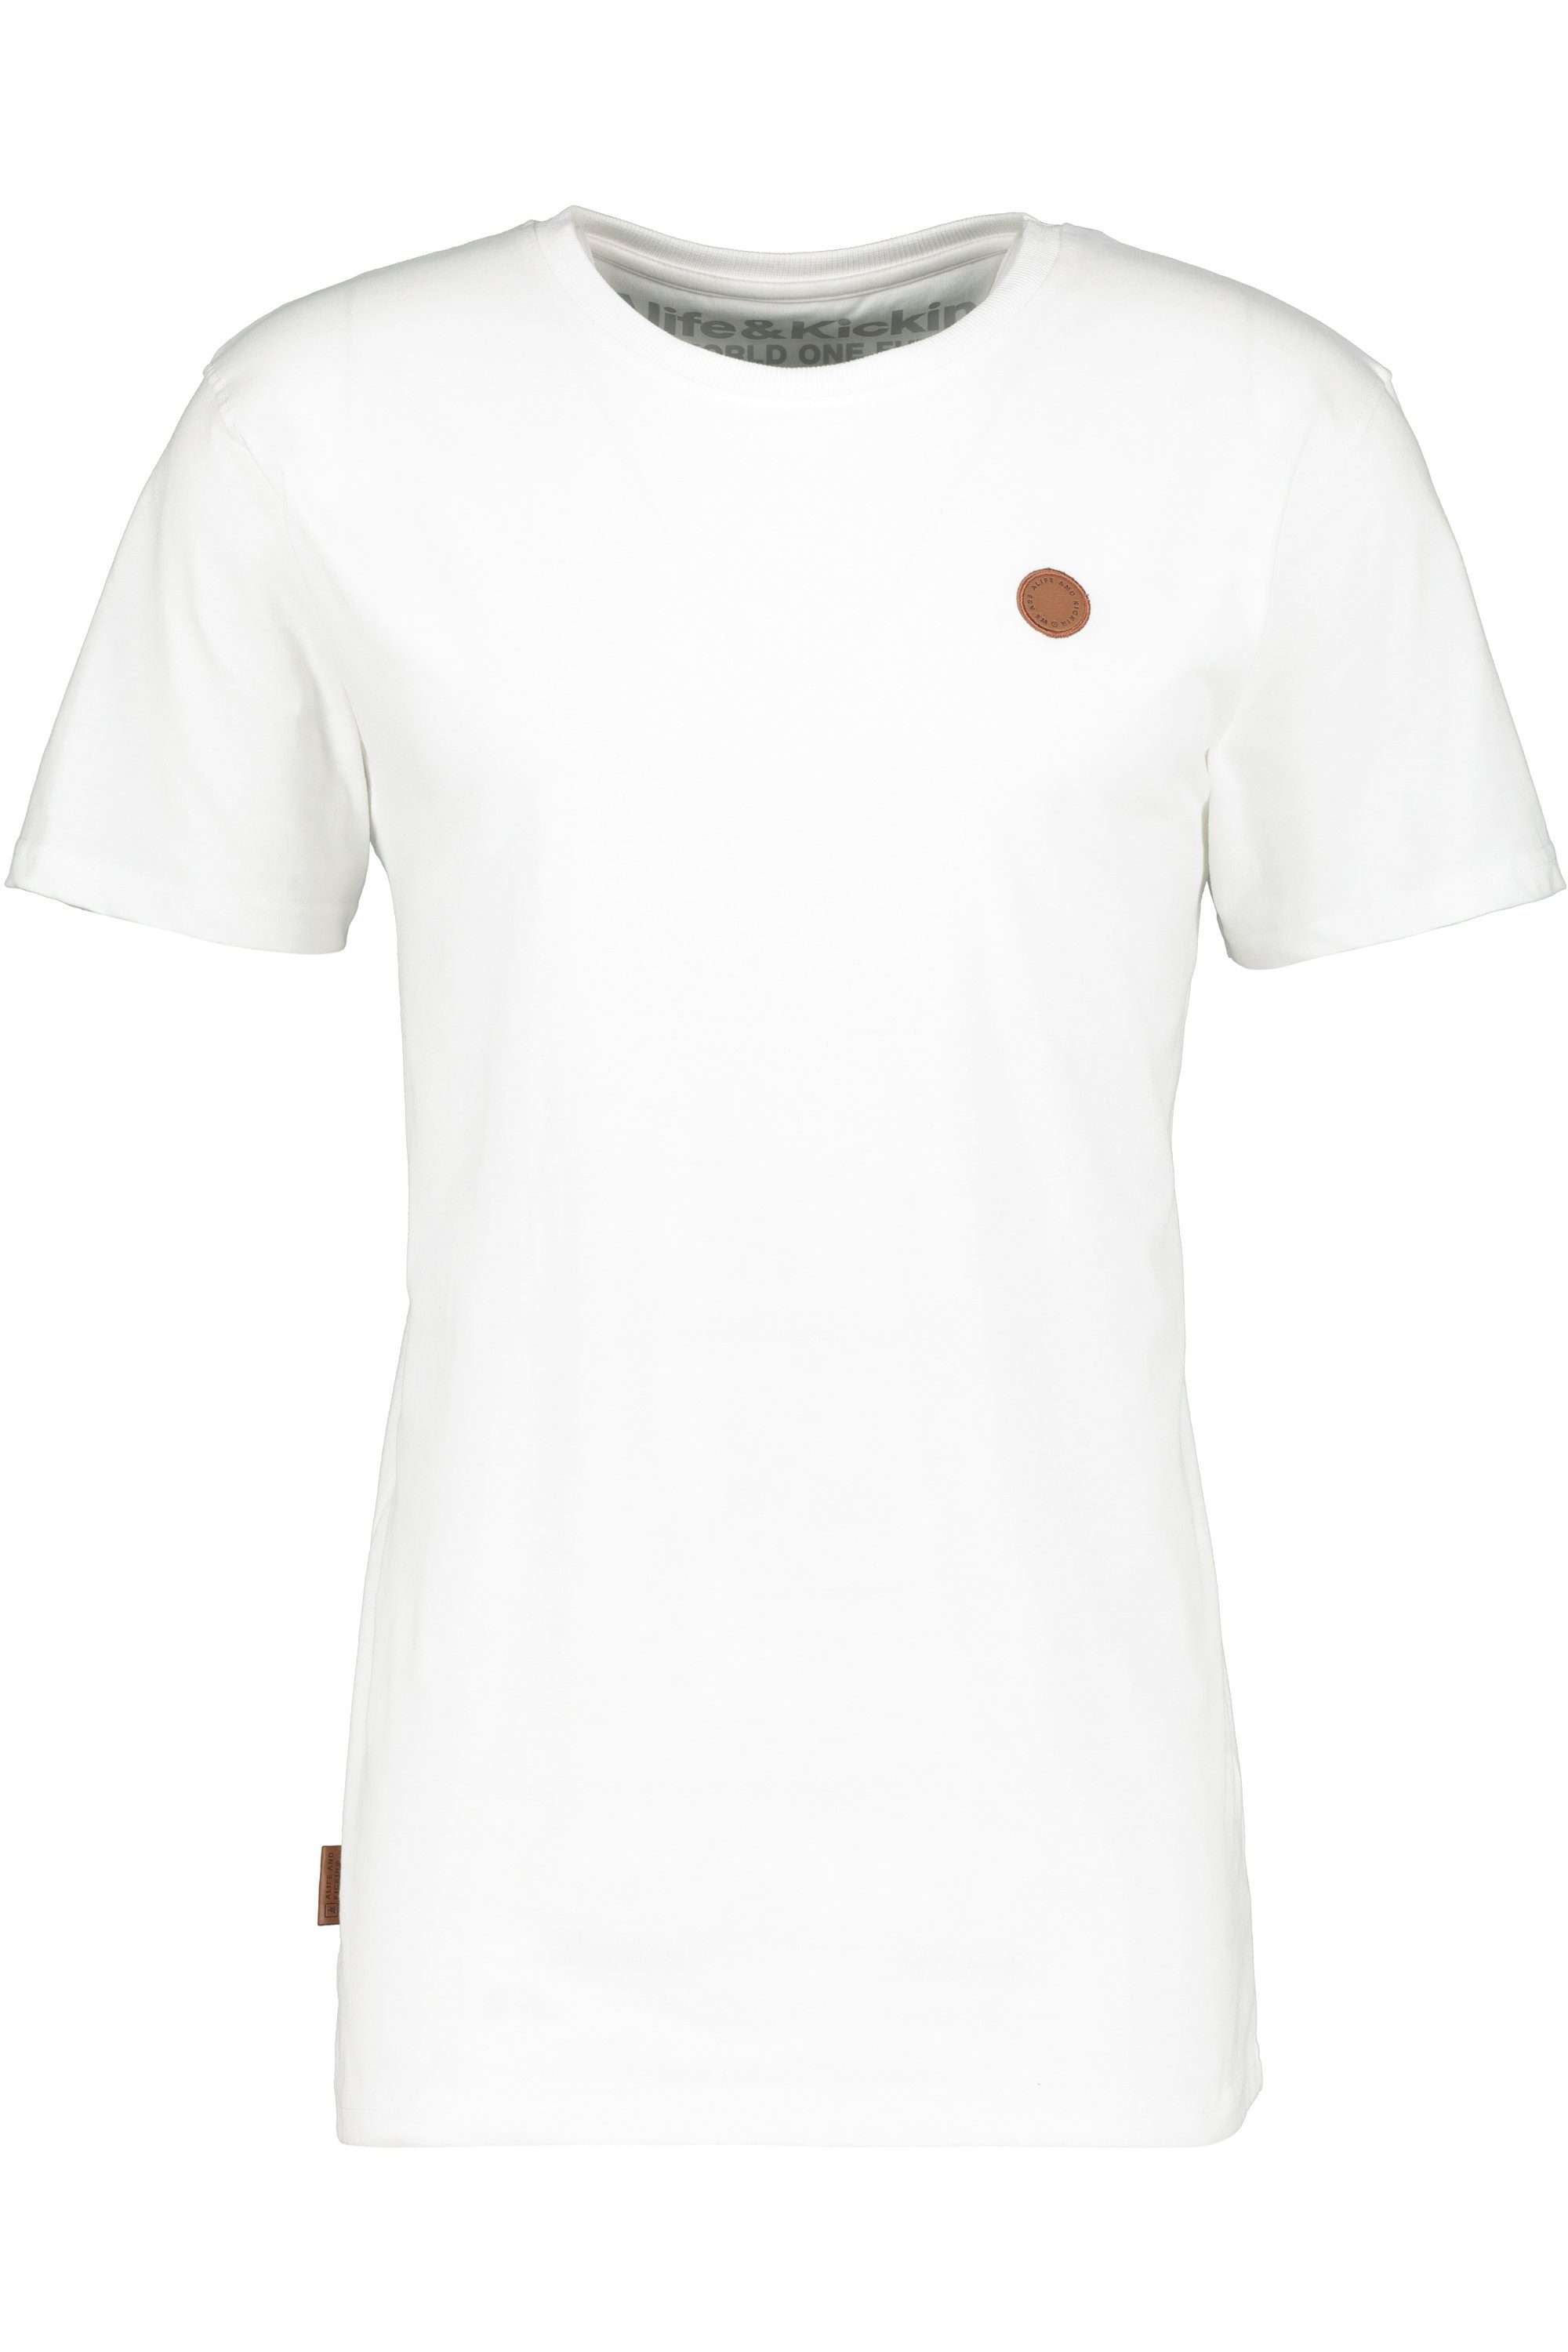 Alife T-Shirt T-Shirt cloudy Herren & Kickin MatsAK